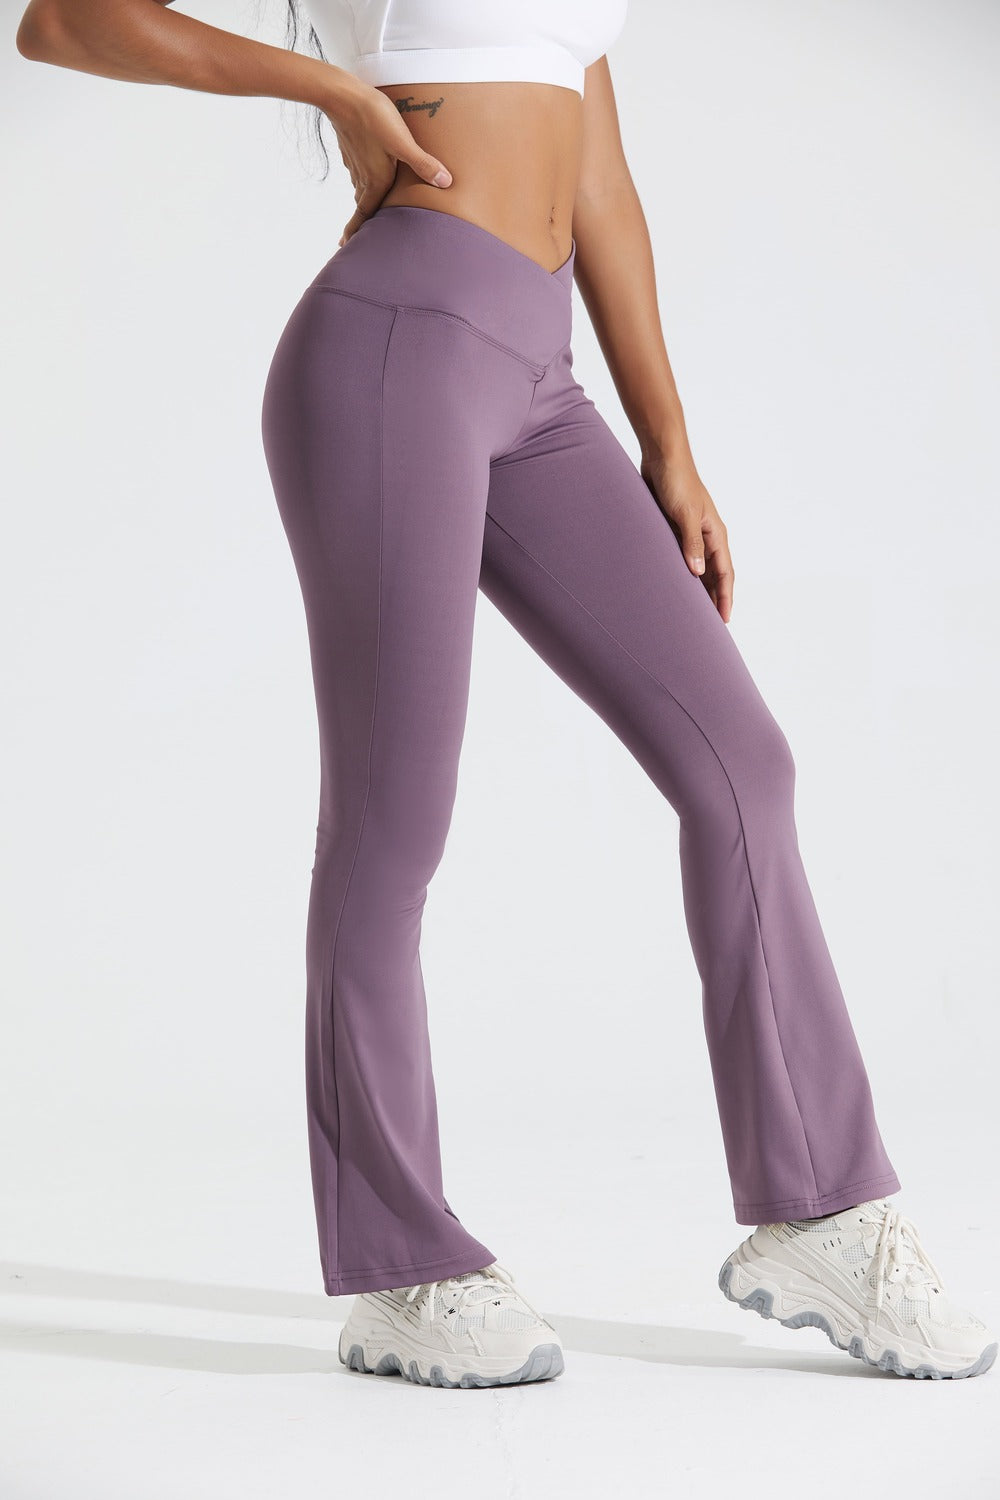 Flare Crossover Legging - LA7 ONLINE Activewear Purple / XXL